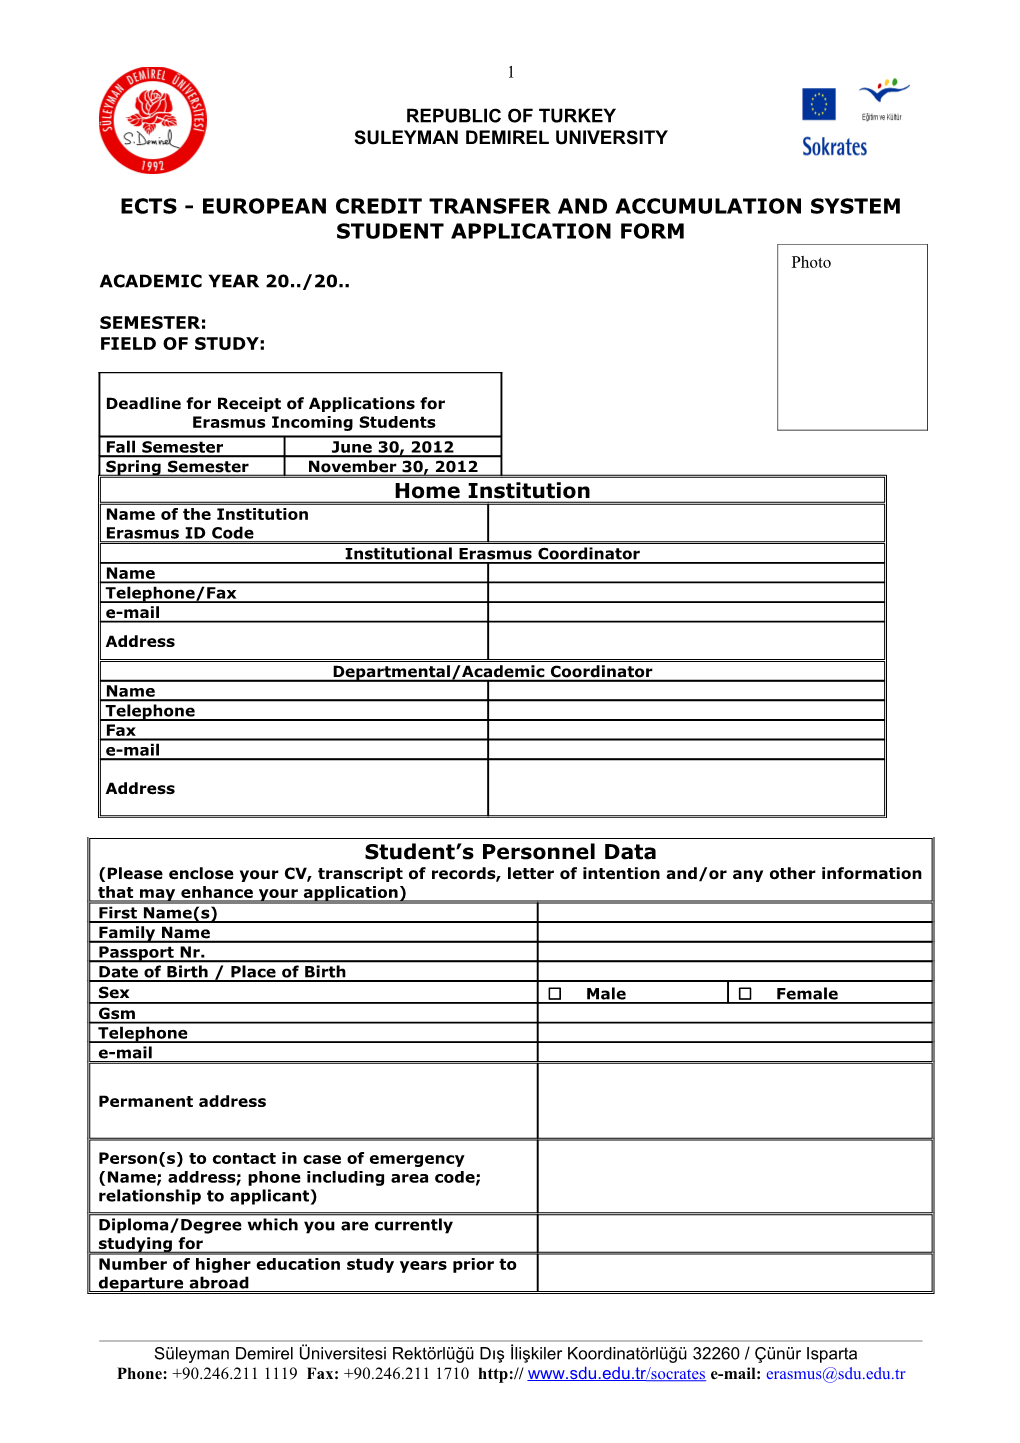 Erasmus Student Application Form s1